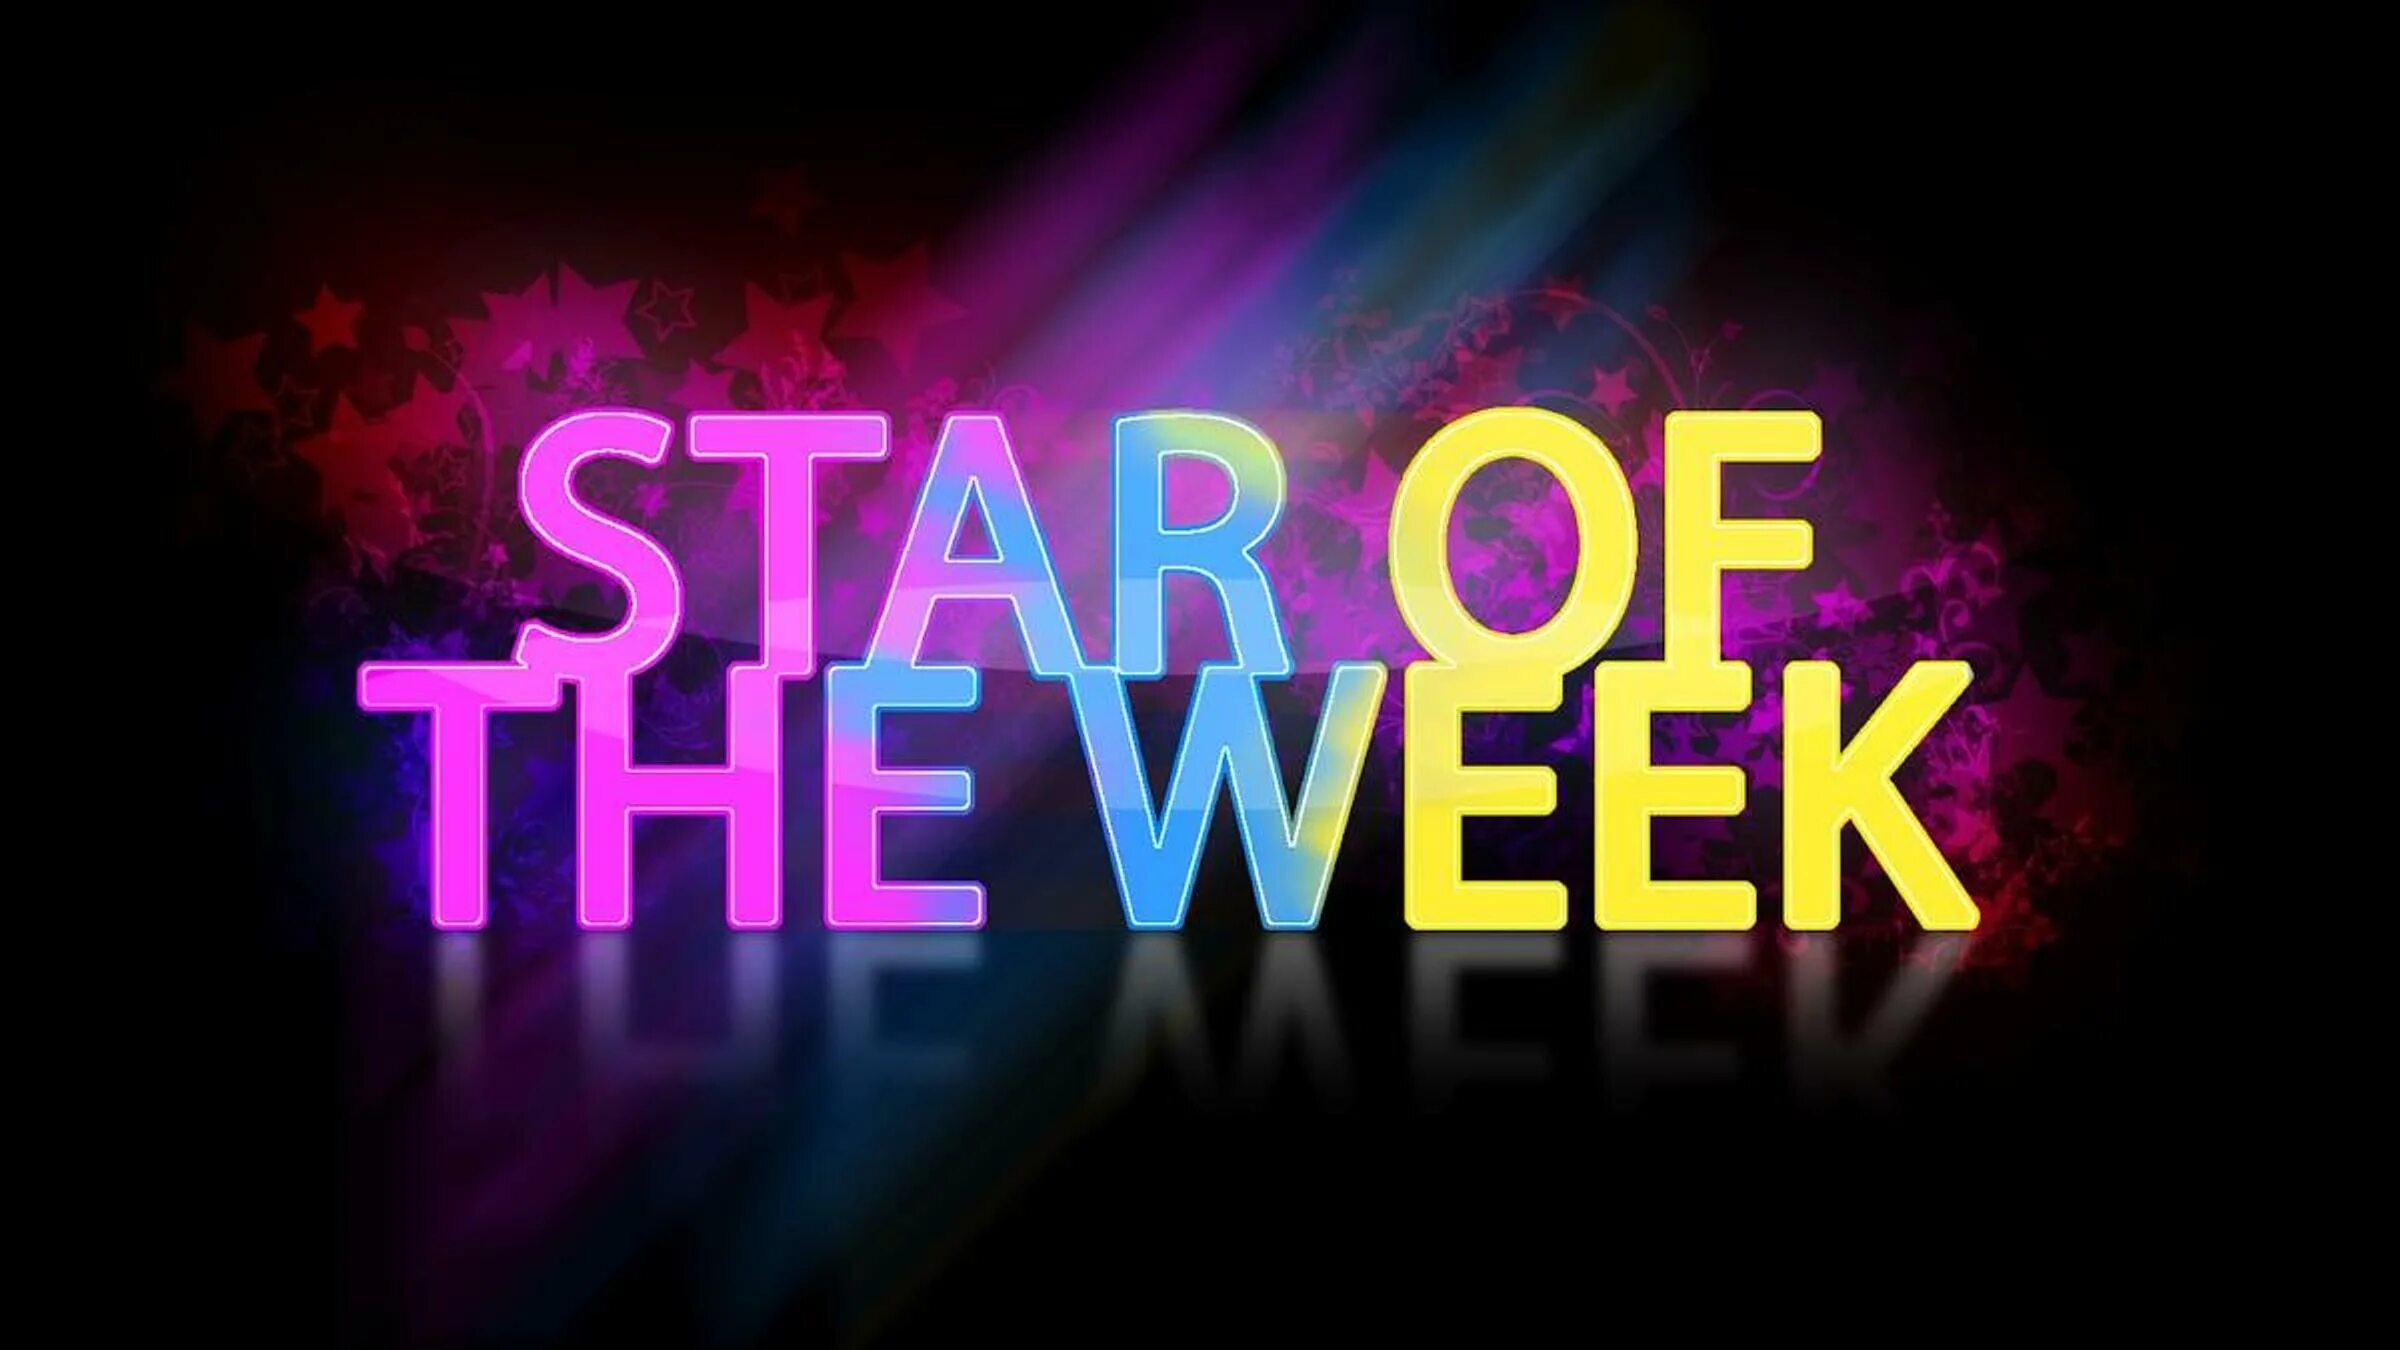 Week star. Star of the week. The week. Star of the week Award. Картинки this week.